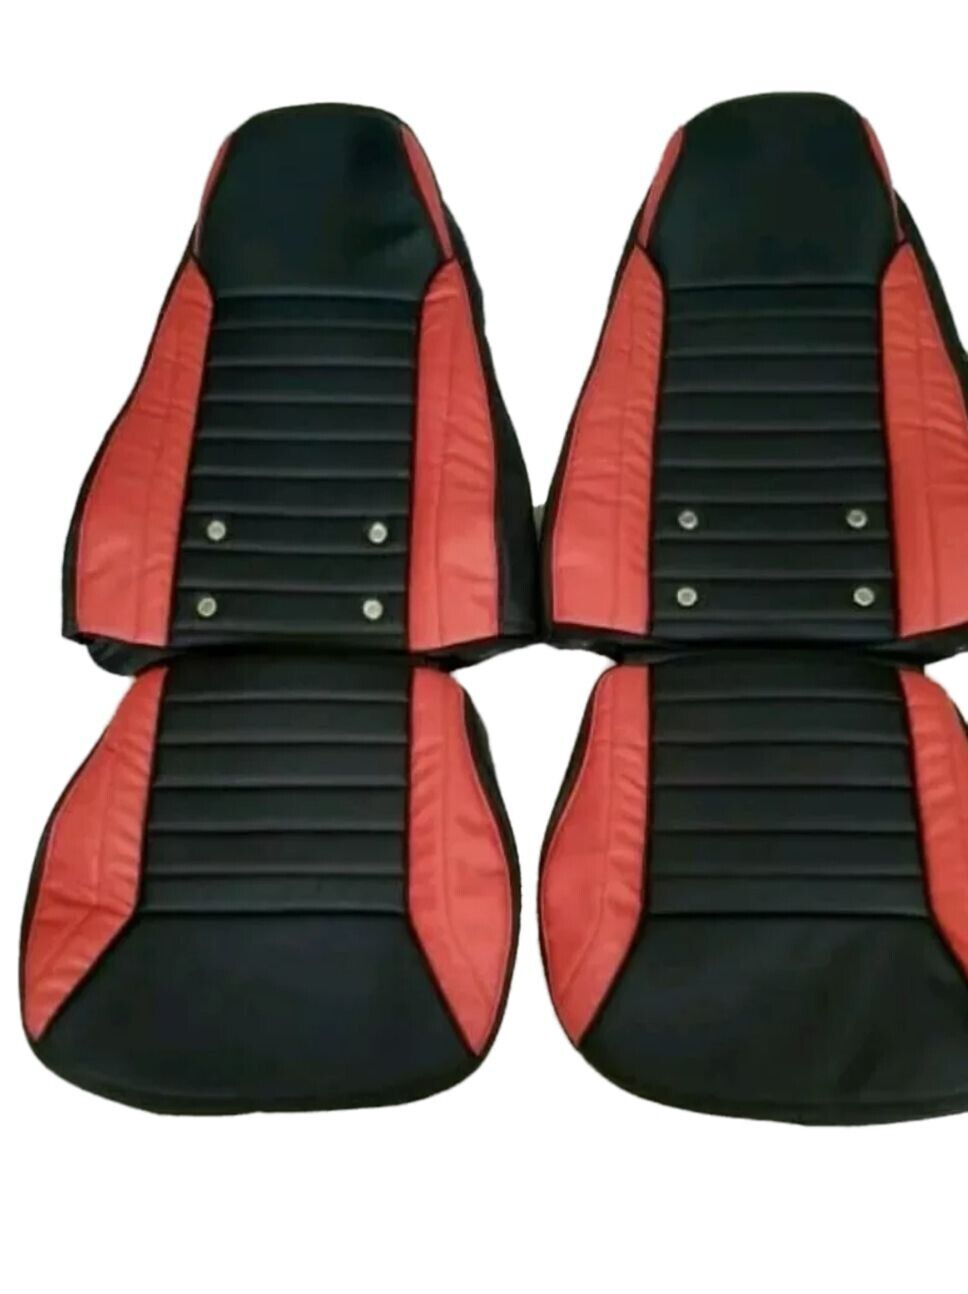 Datsun 340Z/260Z/280Z Synthetic Leather Sports Seat Covers Red & Black